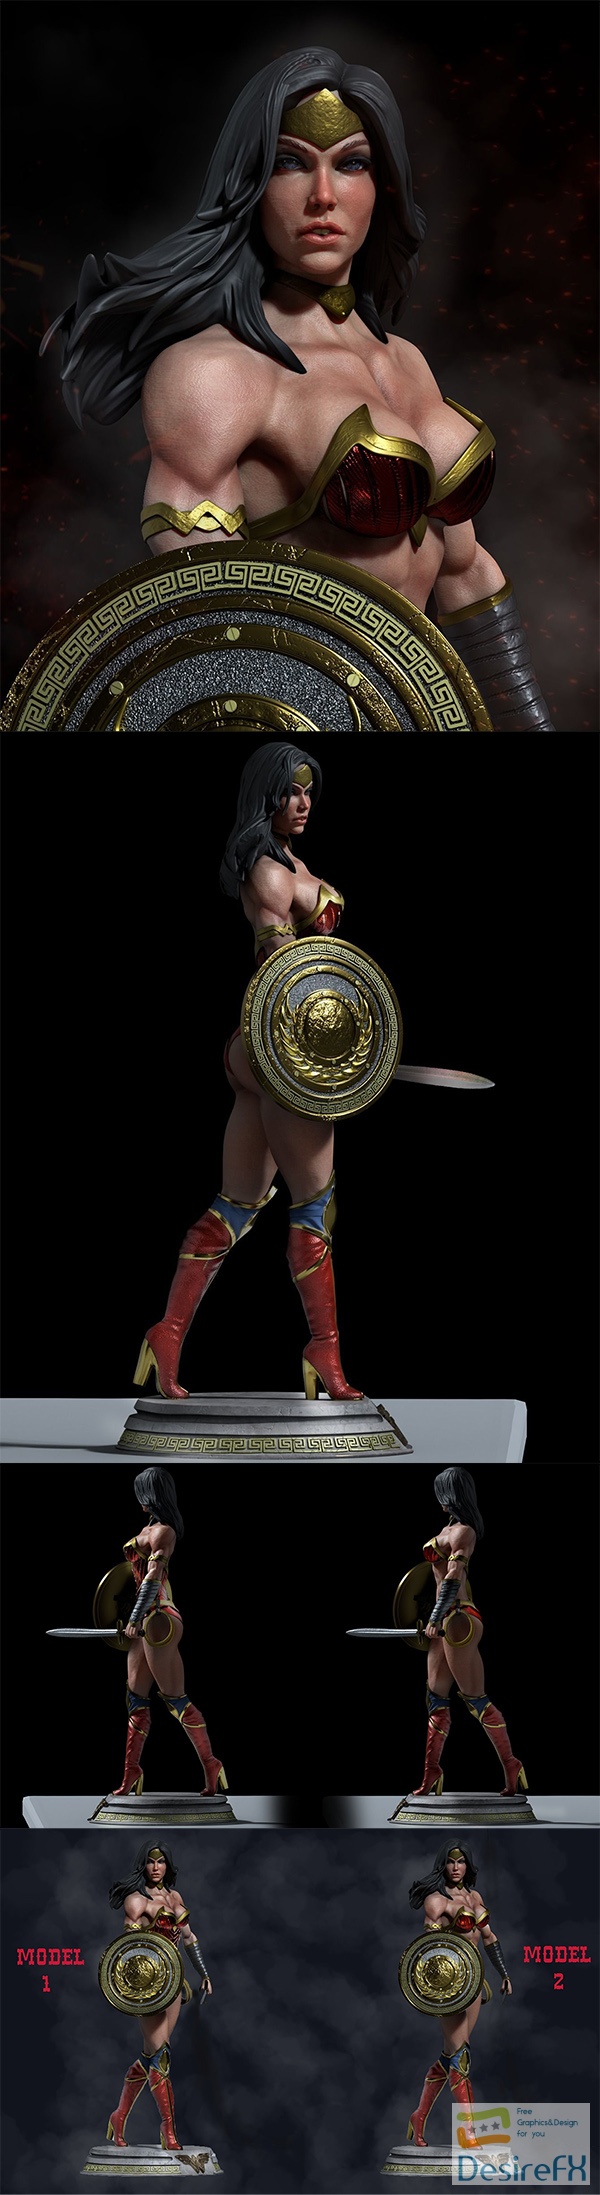 Ca 3d Studios – Wonder Woman Pack Model 1 and Model 2 – 3D Print